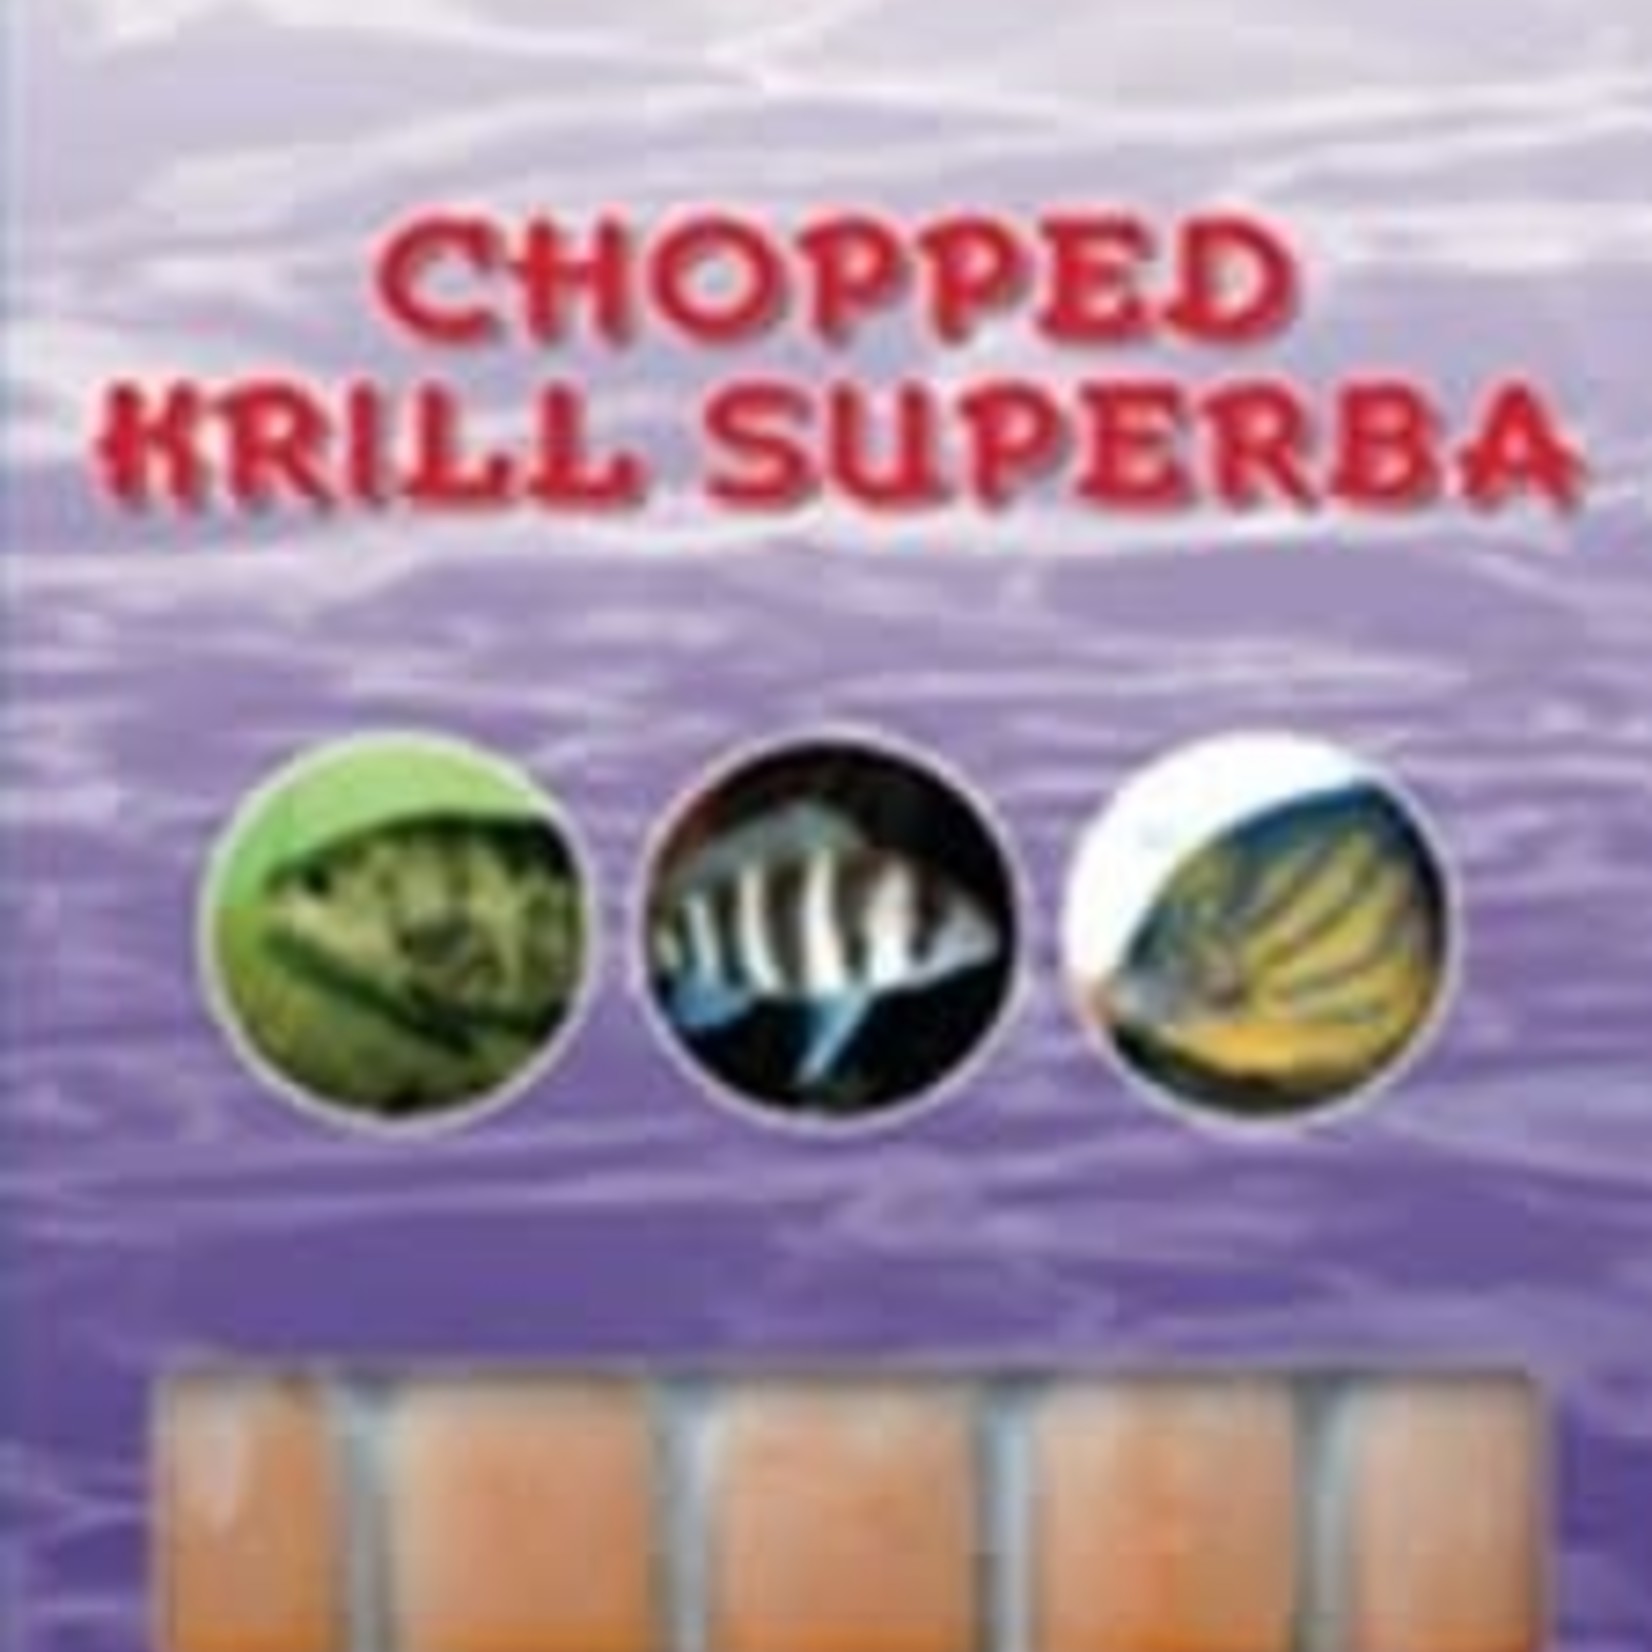 Ocean Nutrition gehakte superba-krill (groot) - 100gr